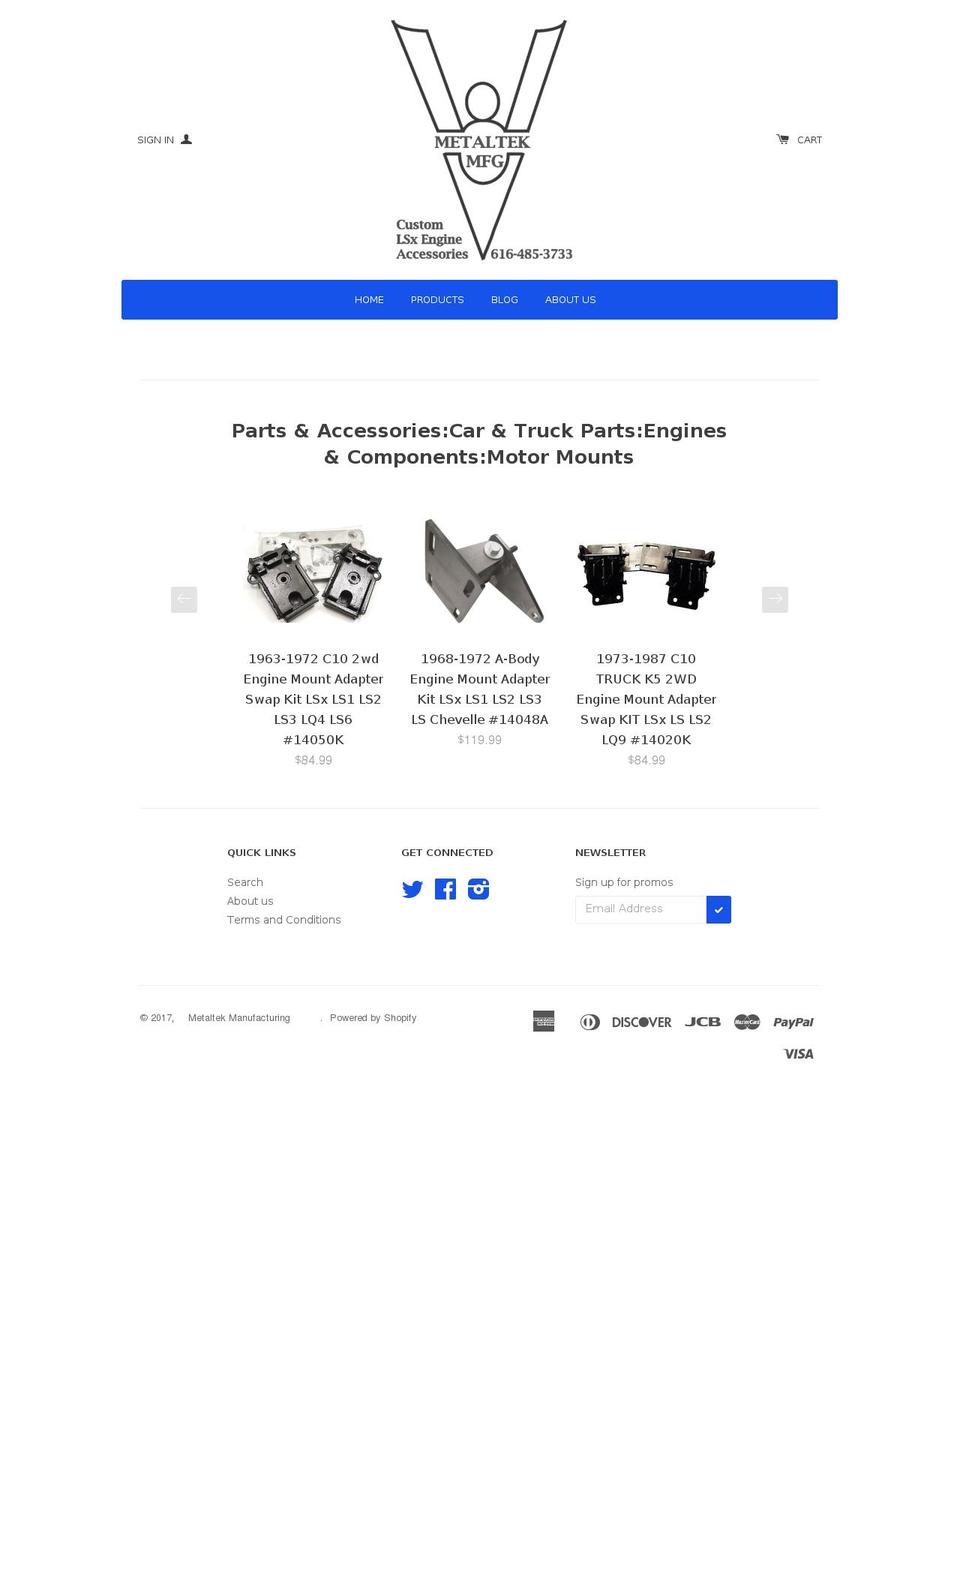 metaltekmfg.com shopify website screenshot